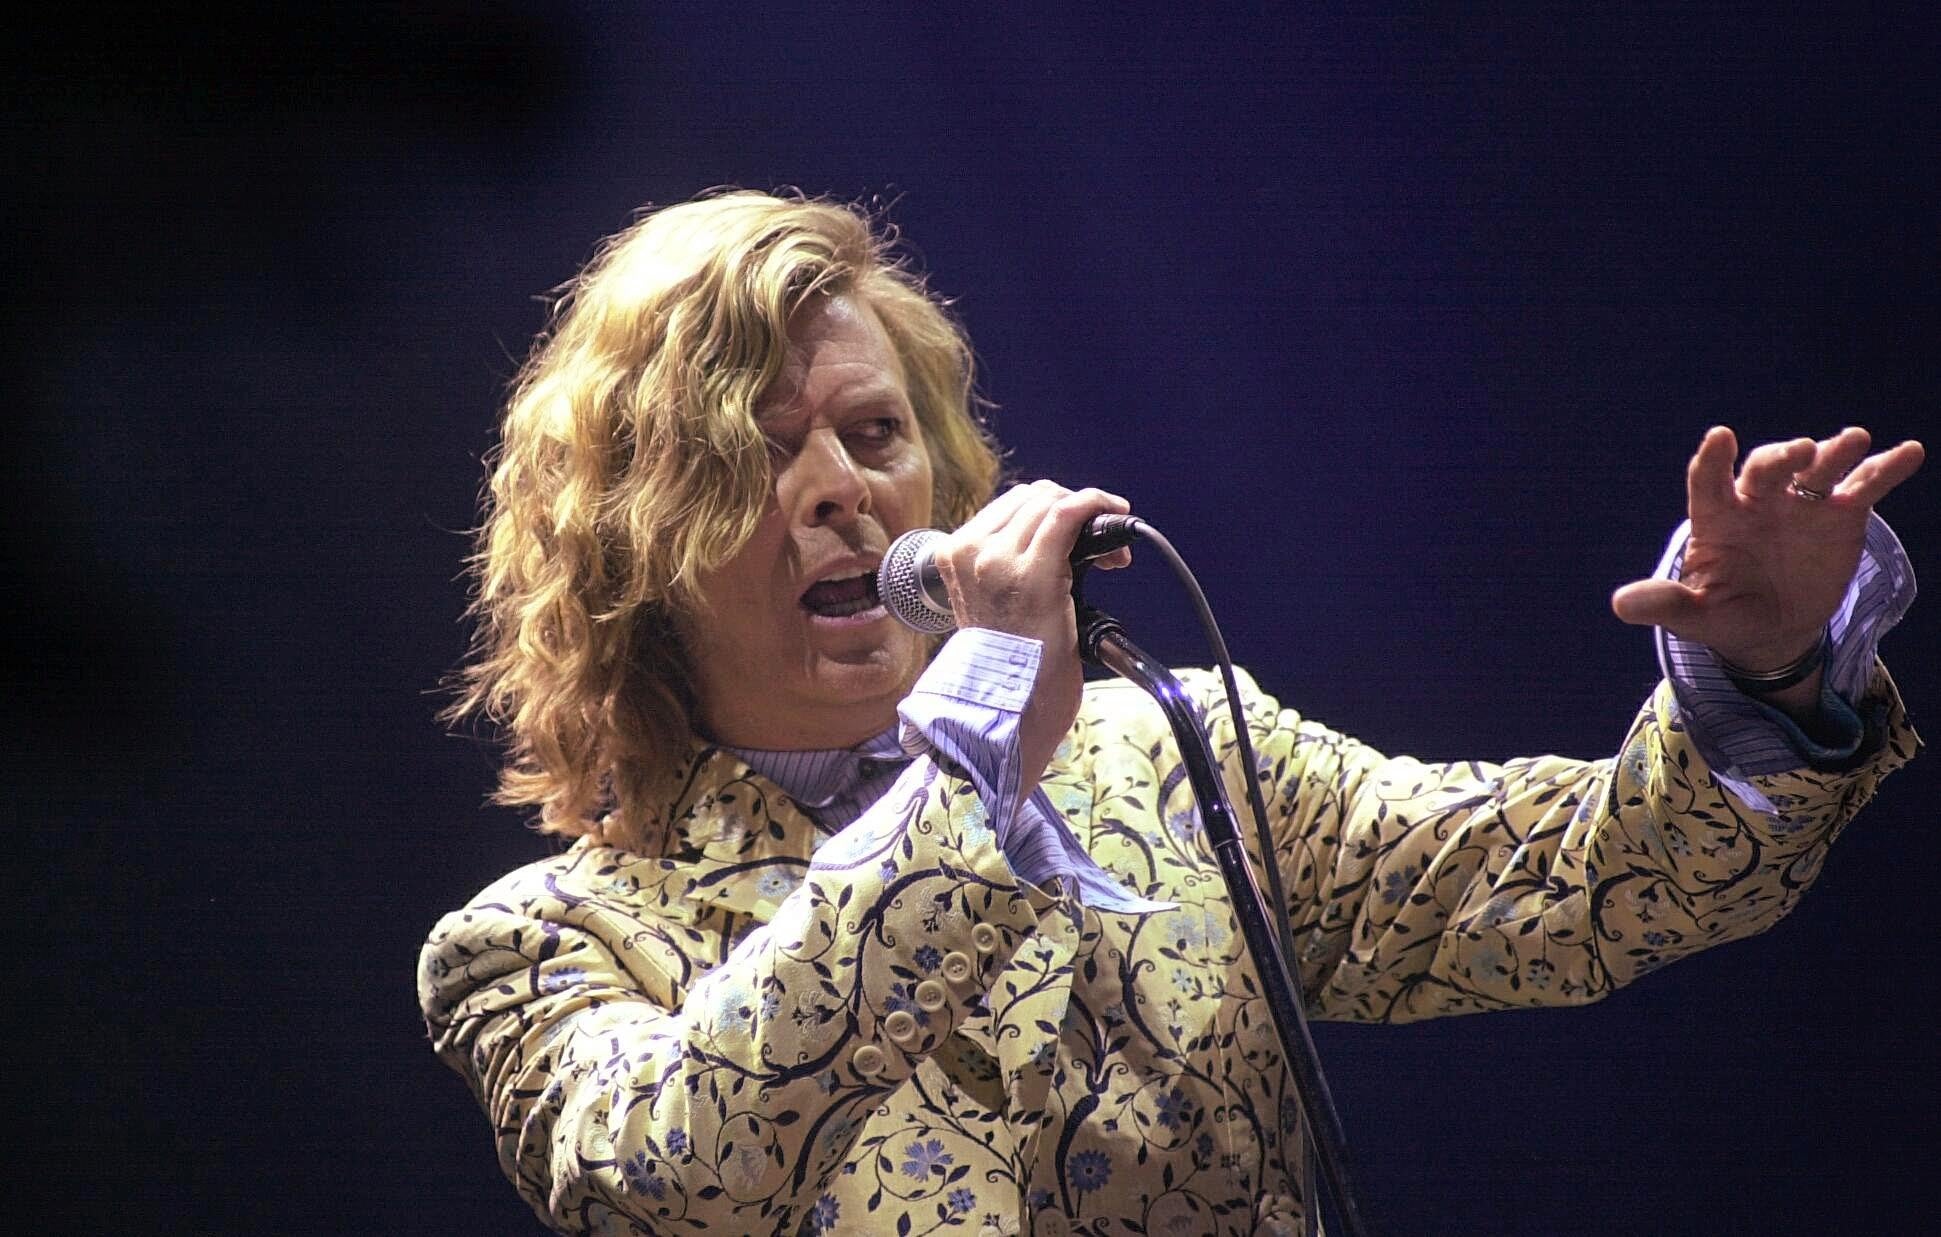 Bowie at Glastonbury in 2000